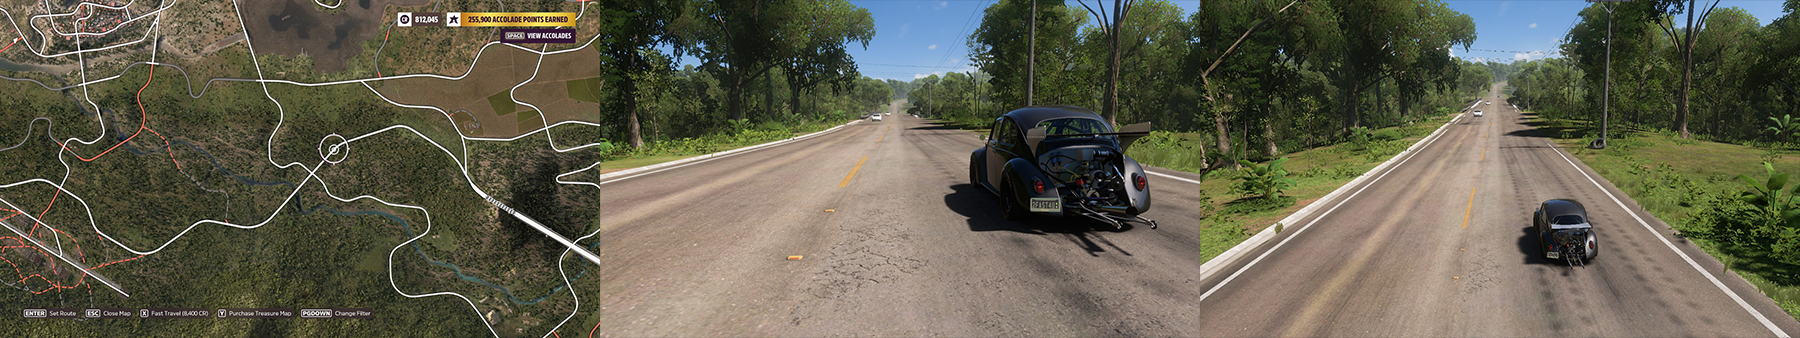 Forza Horizon 5 - Drag Racer Comprehensive Guide - Multiplayer & Walkthroughs - Immersive 